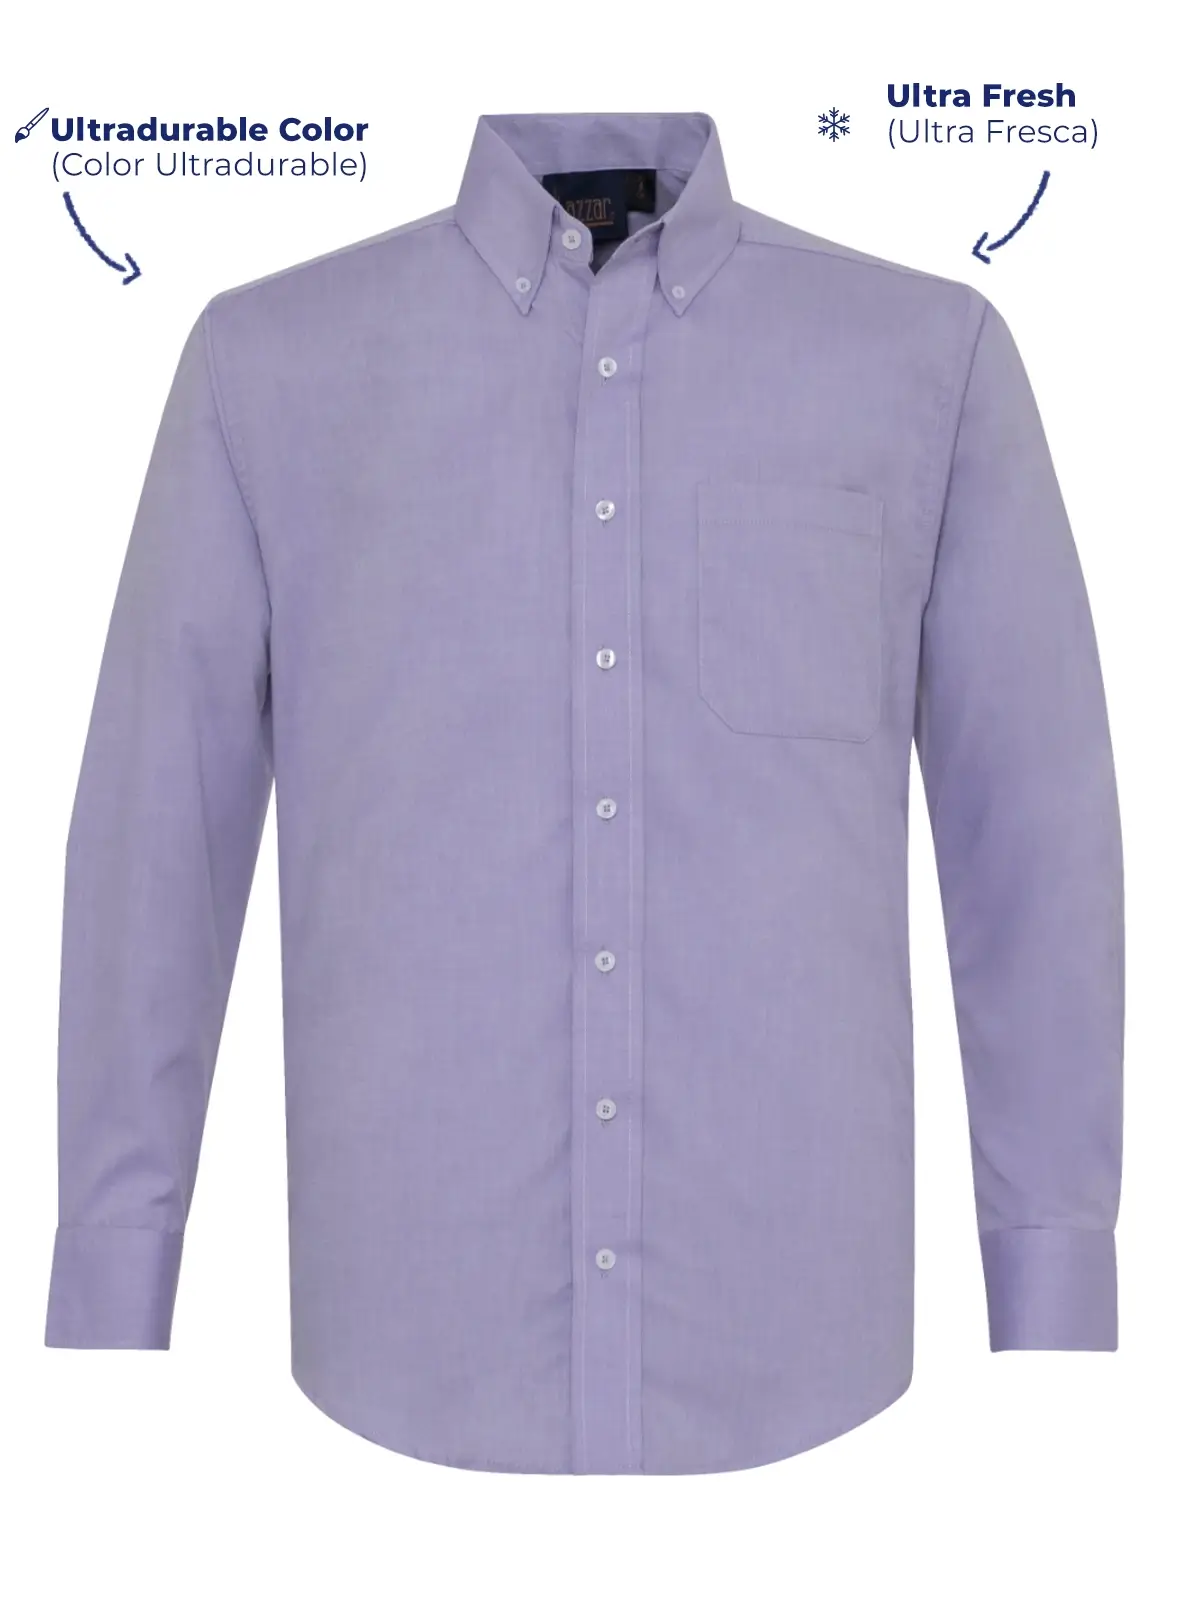 Long sleeve purple oxford shirts